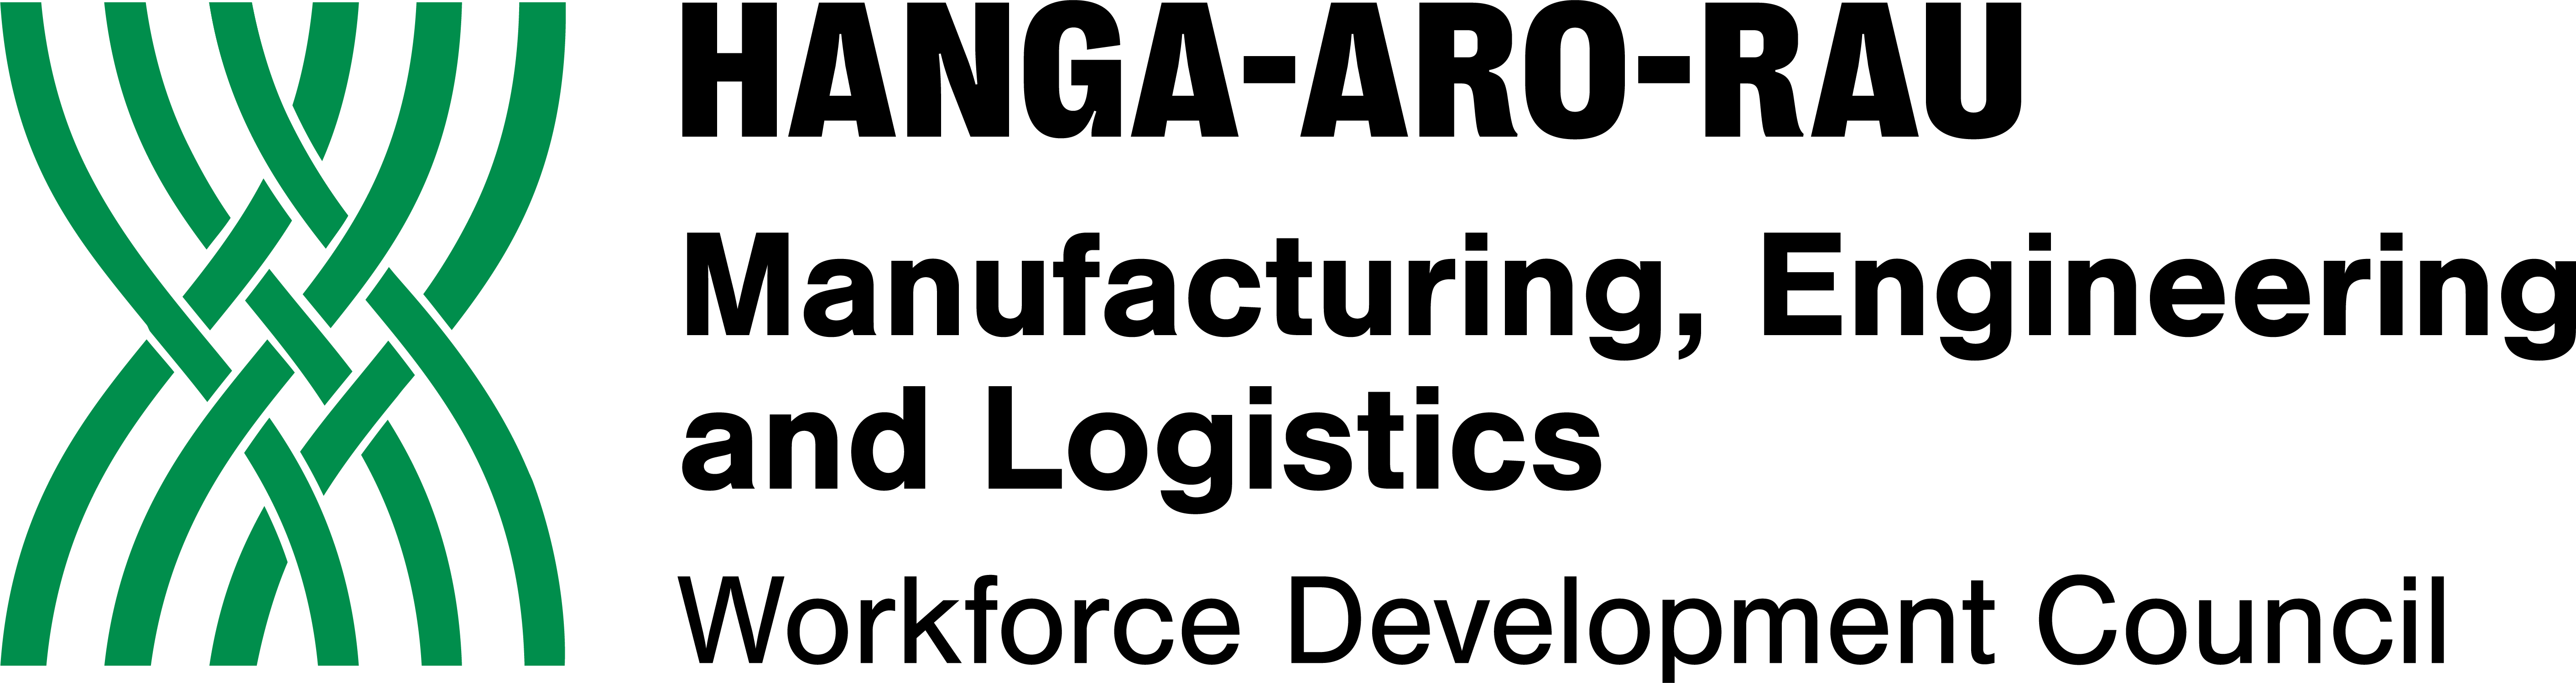 Hanga-Aro-Rau Workforce Development Council